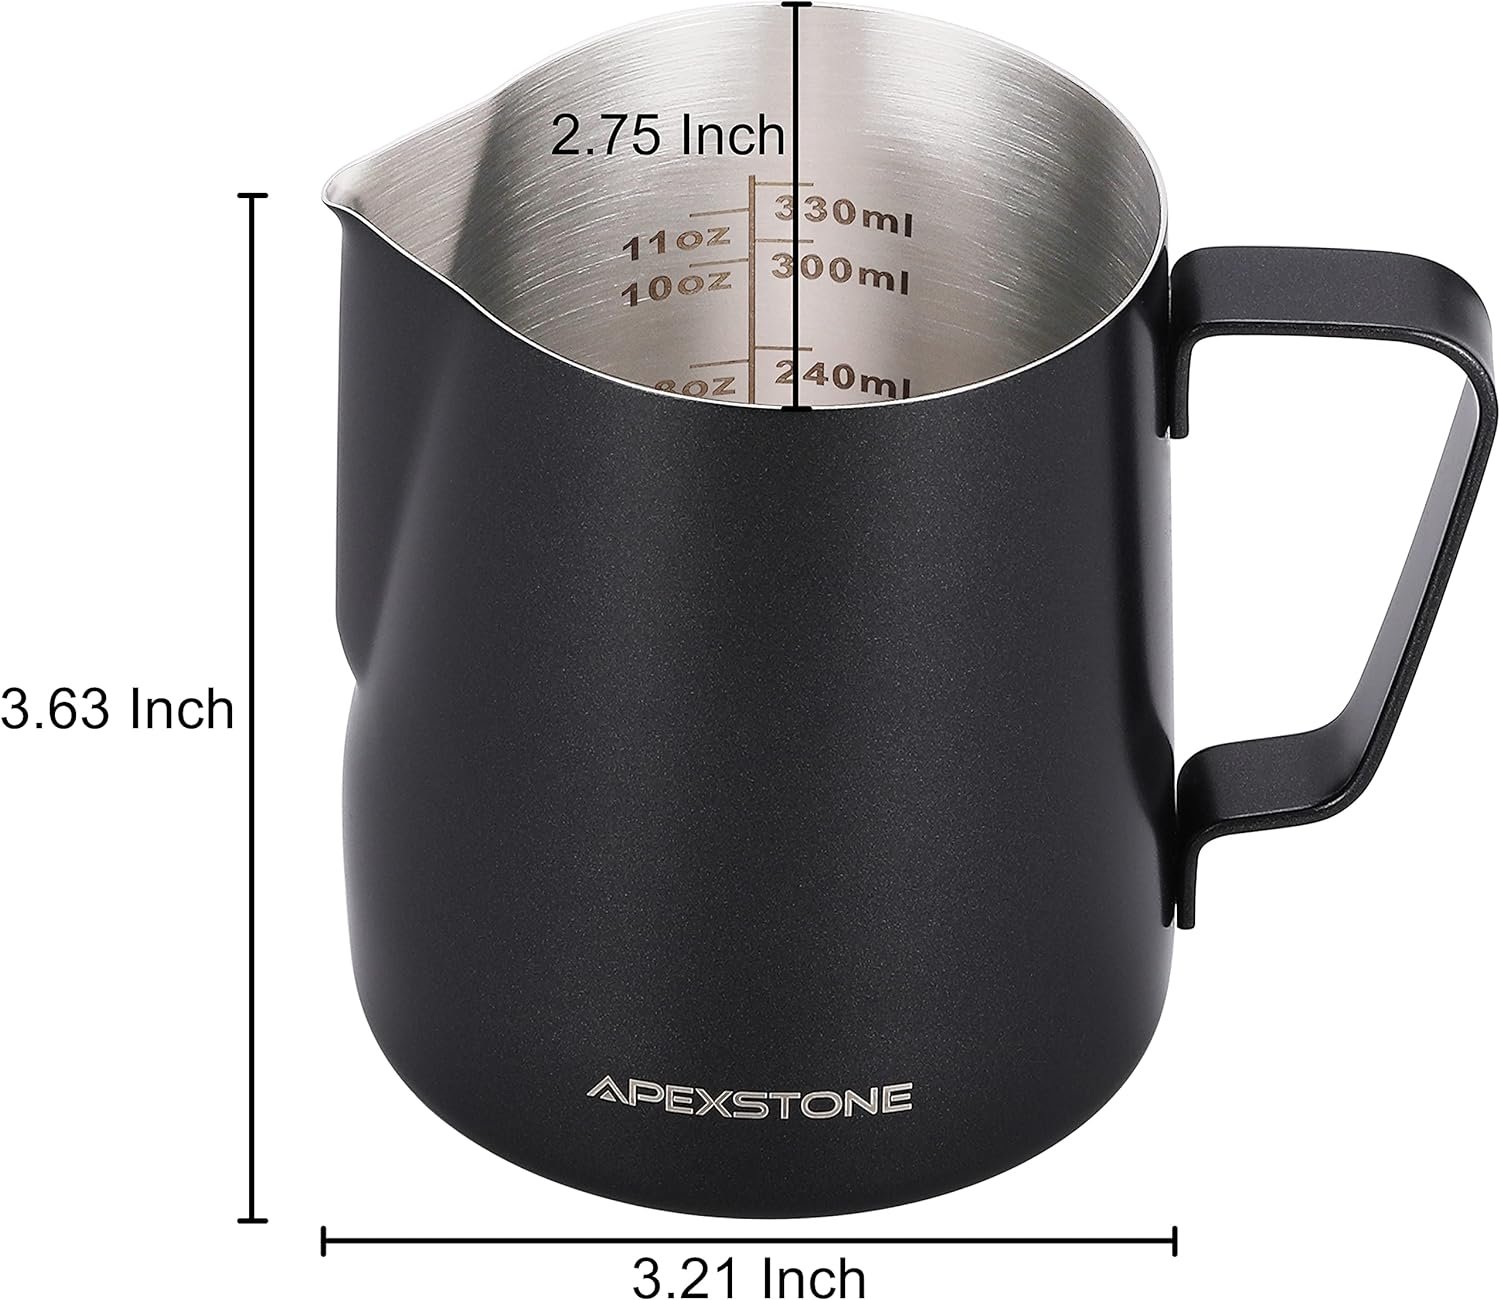 apexstone 12 oz espresso steaming pitcher review